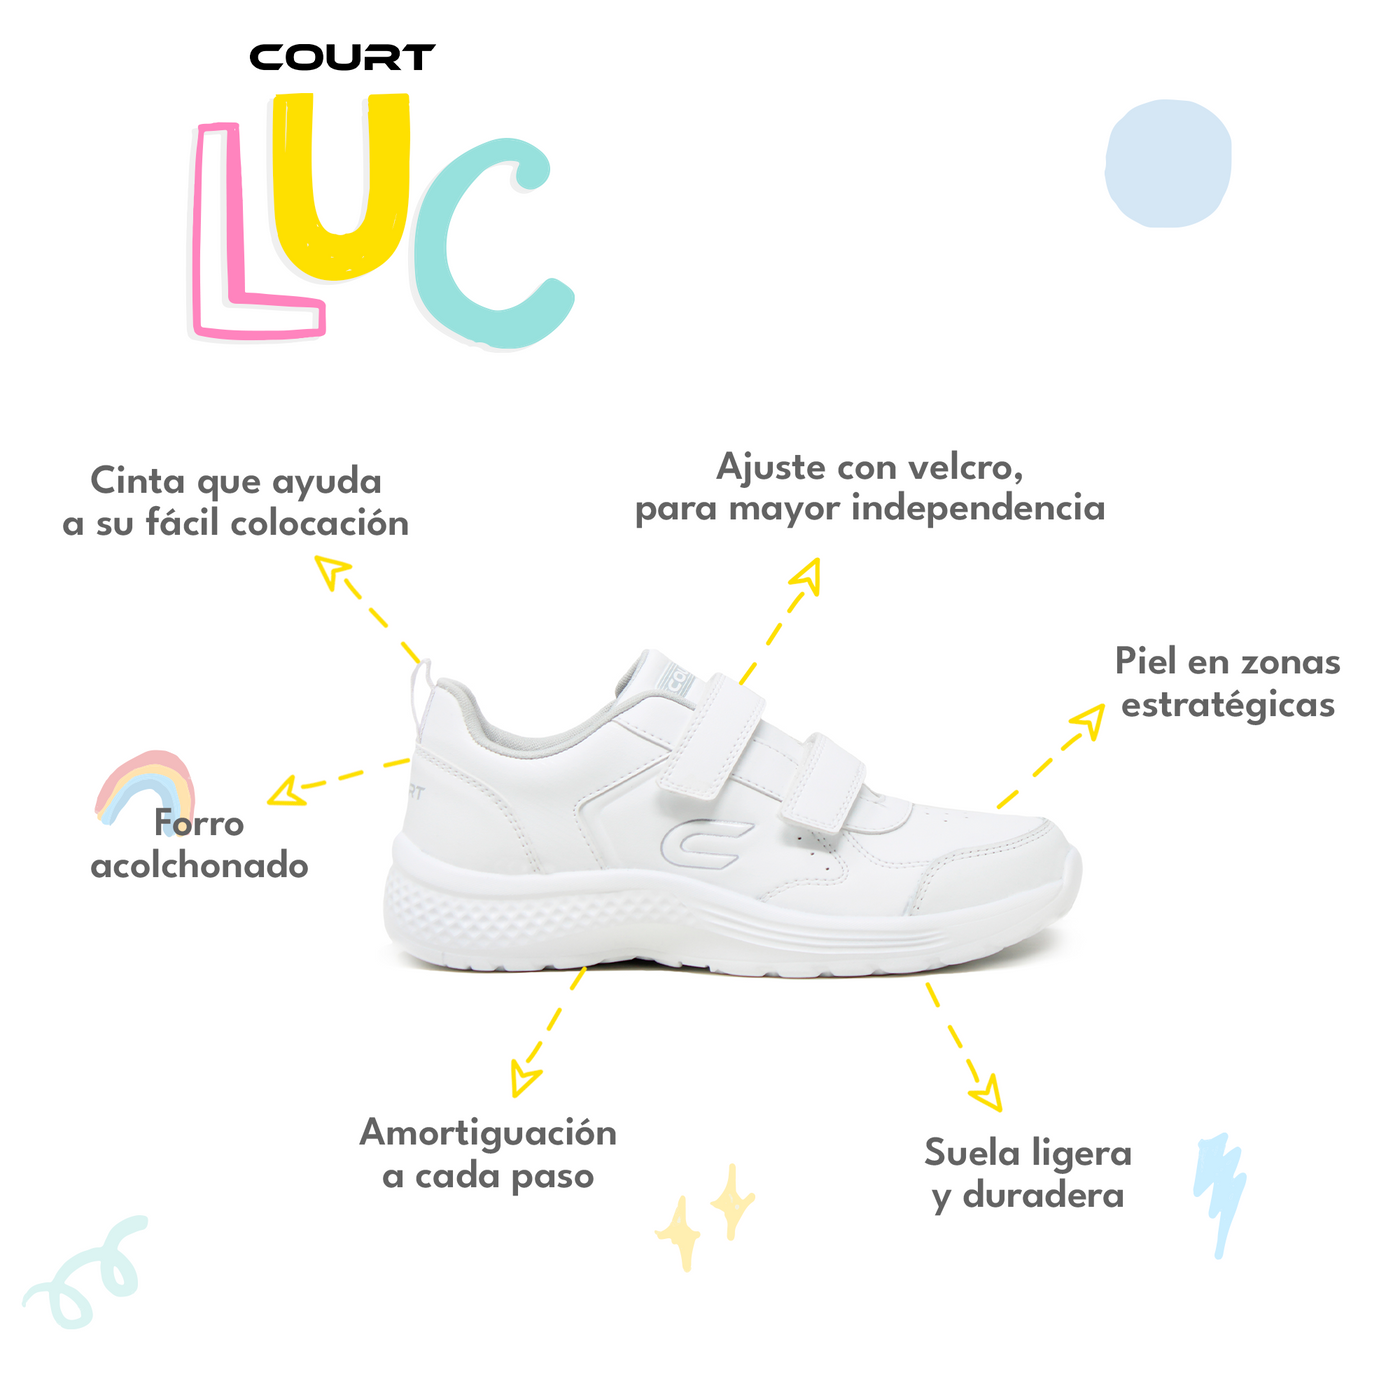 Court | Luc